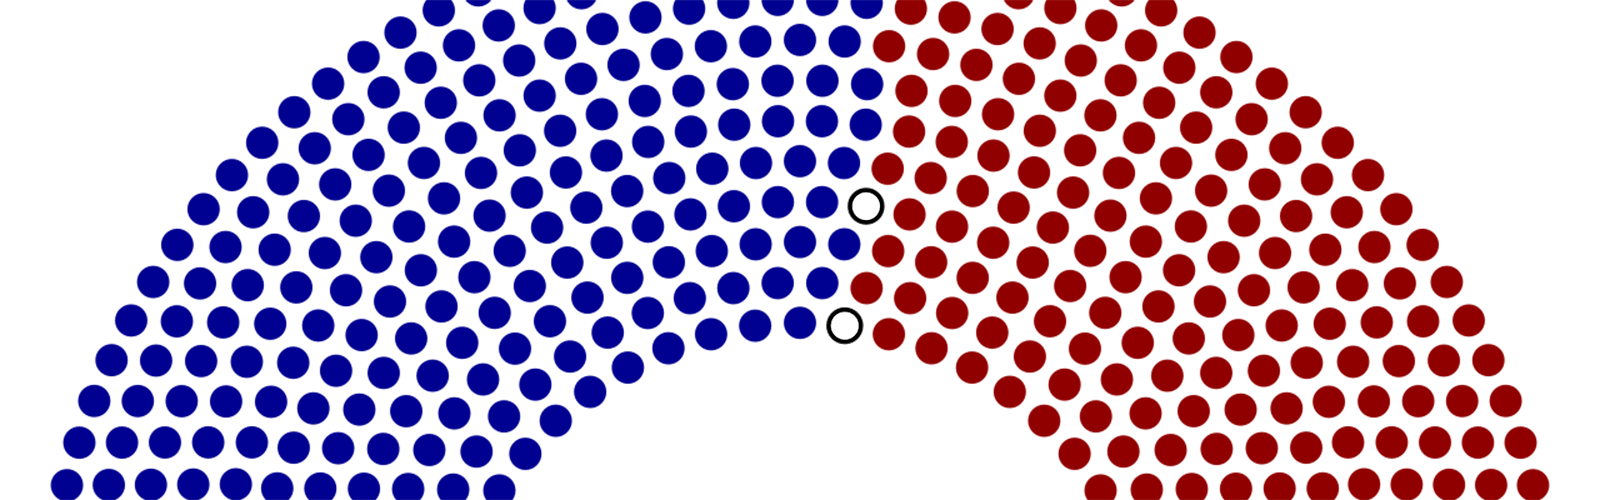 House seats voting